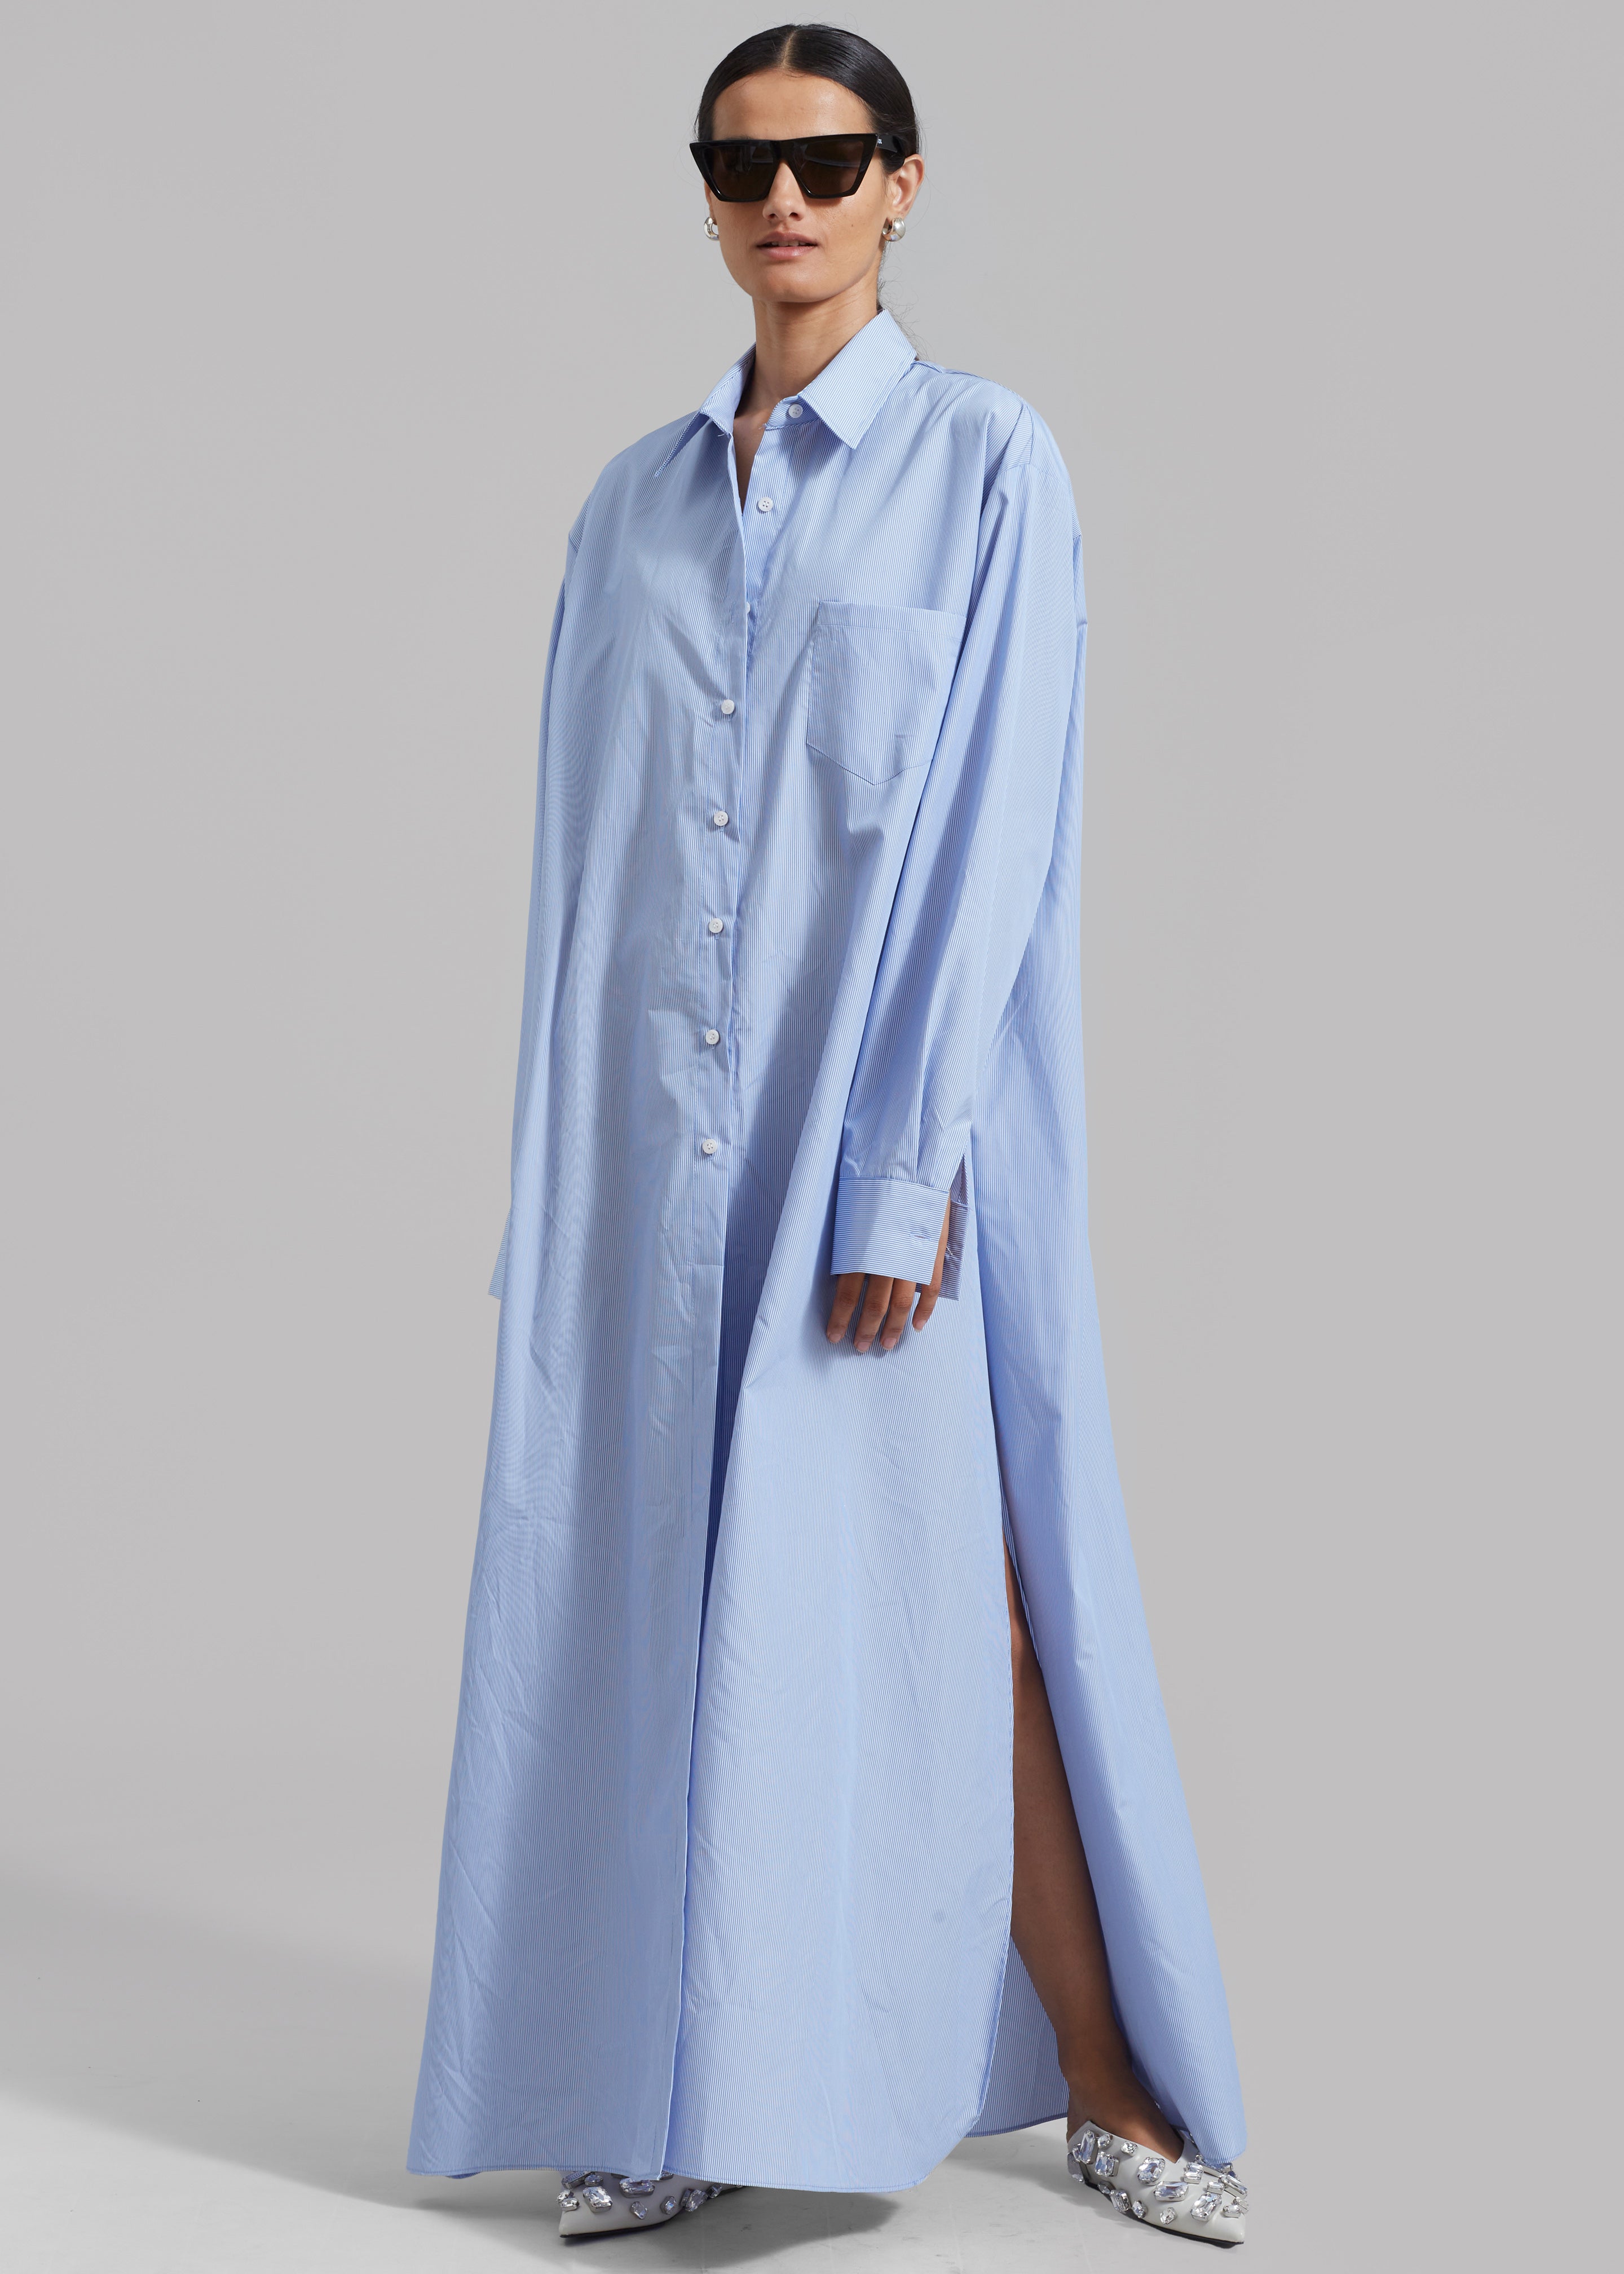 Avery Shirt Dress - Blue Stripe - 5